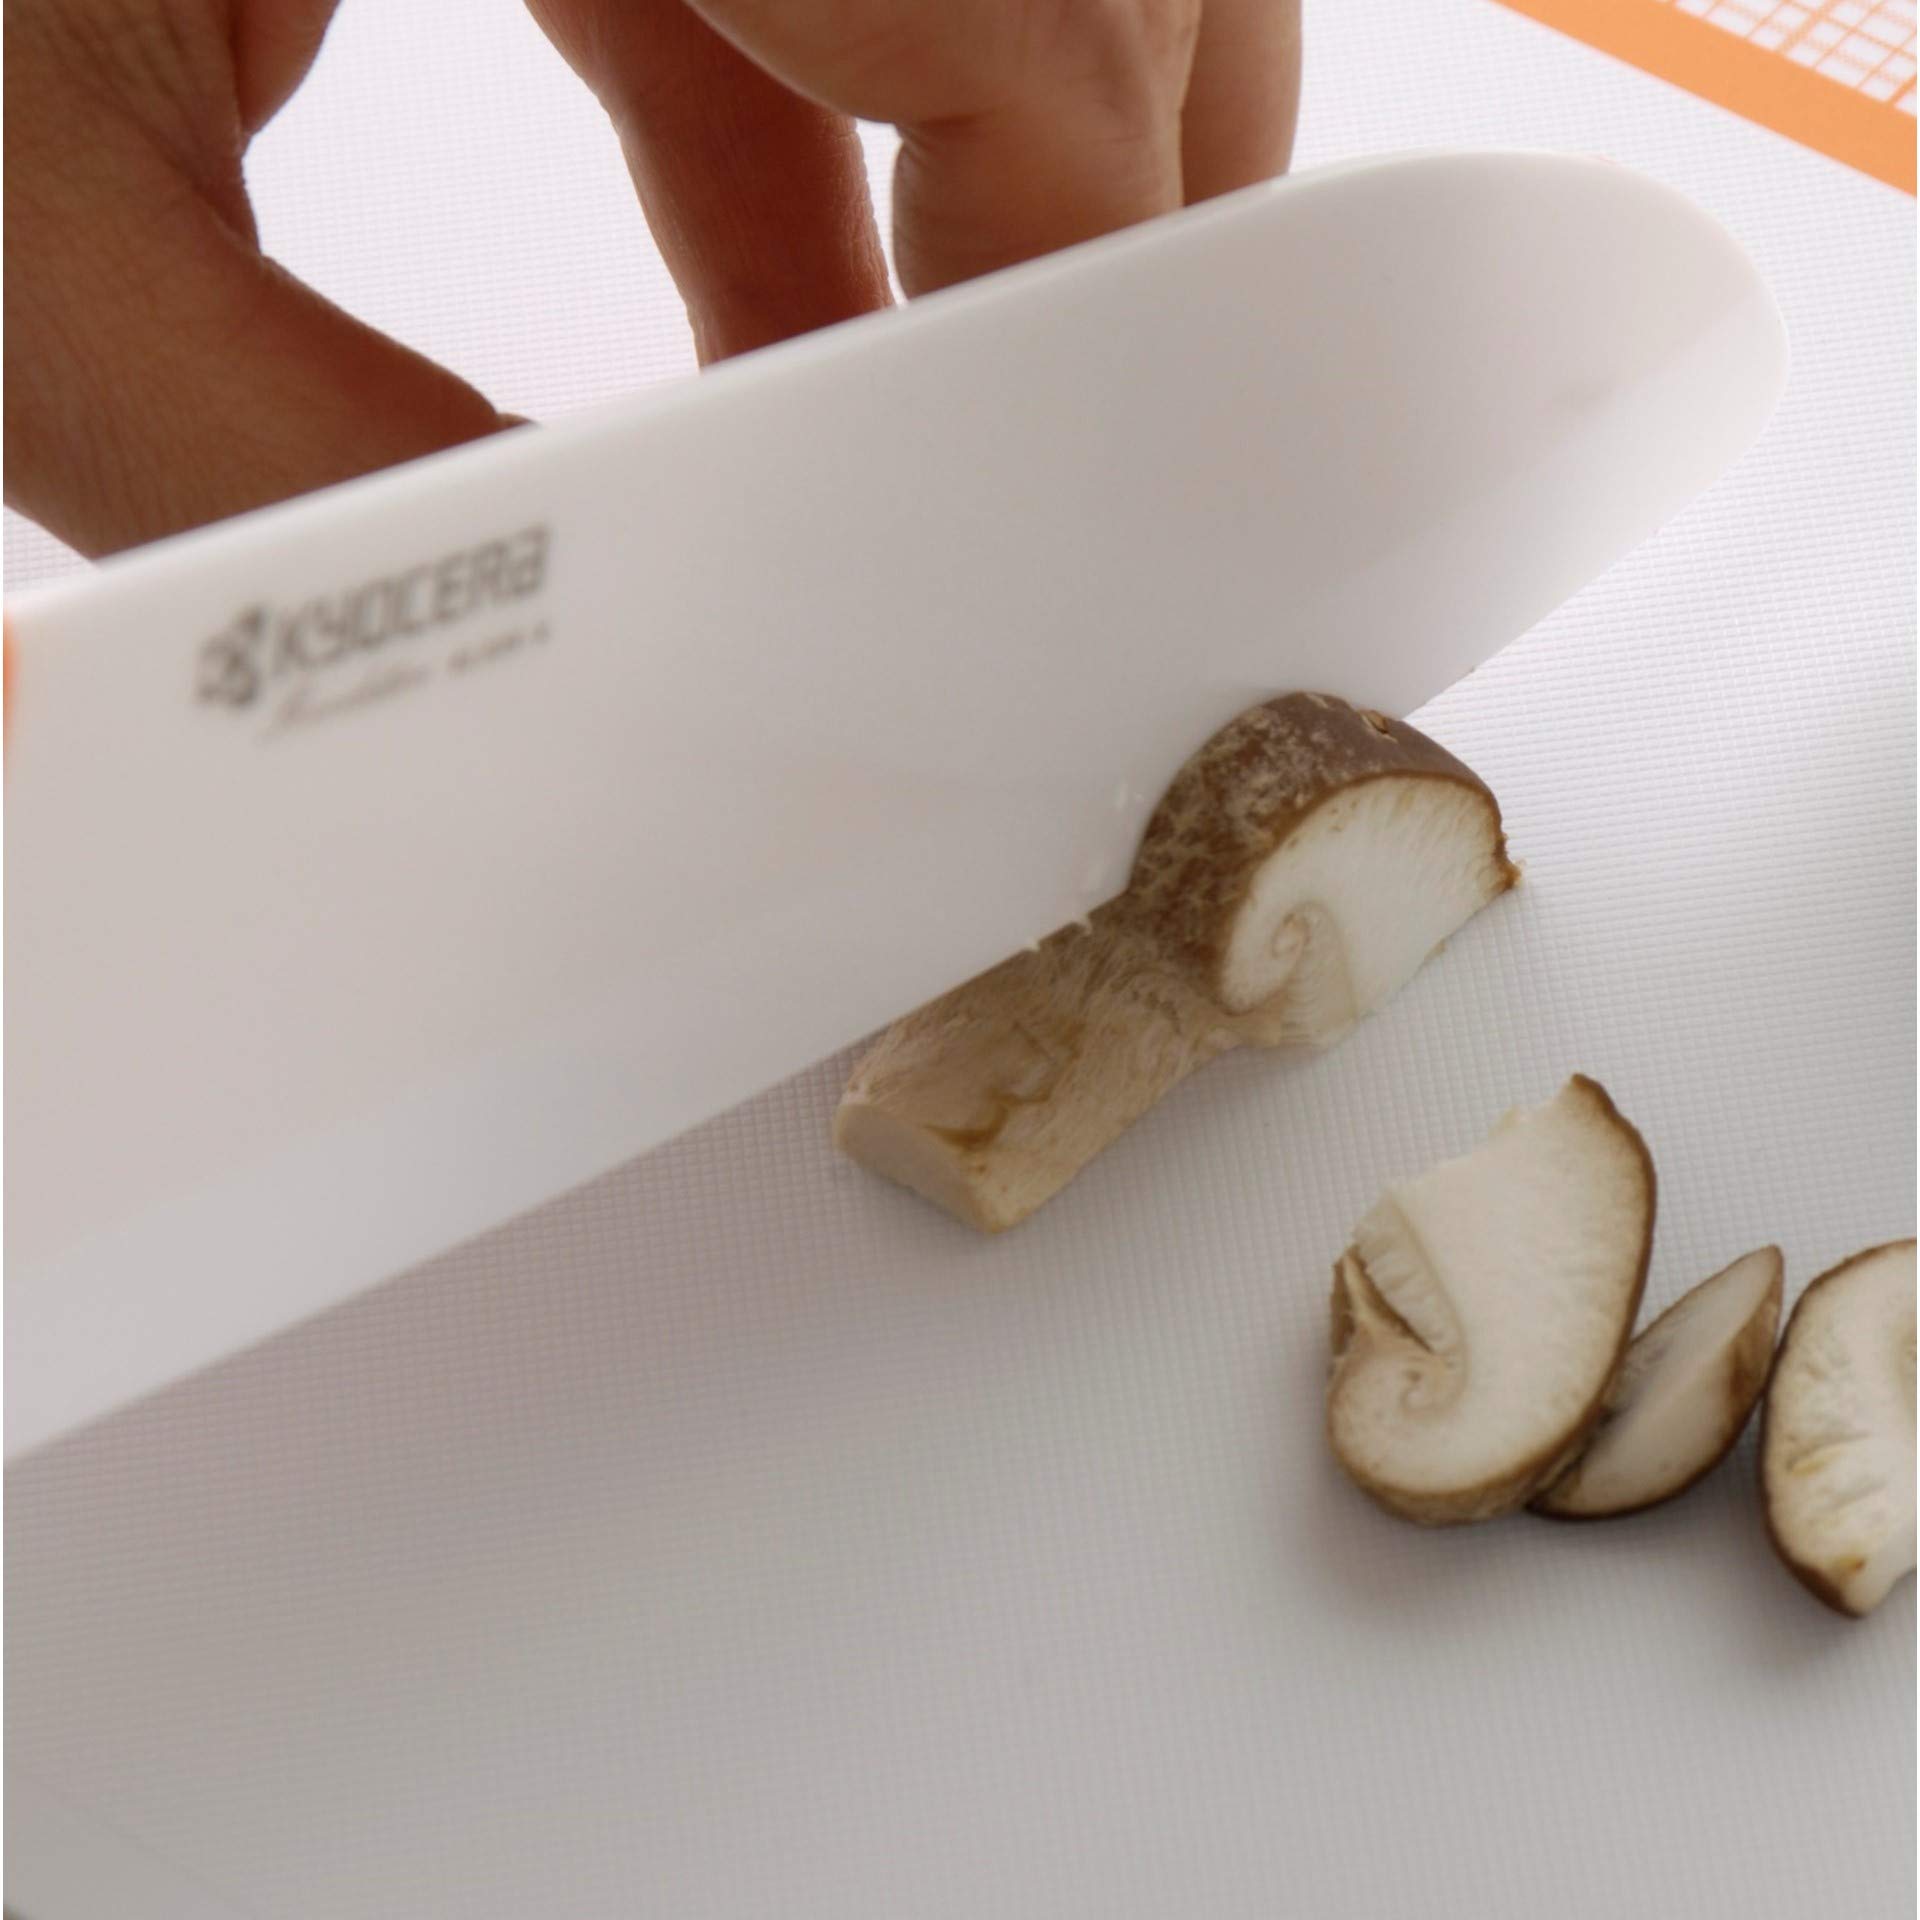 Kyocera Advanced Ceramic Revolution 4-Piece Knife Set: Includes 6-inch Chef's Santoku, 5.5-inch Santoku, 4.5-inch Utility and 3-inch Paring-Red Handles w/ White Blades